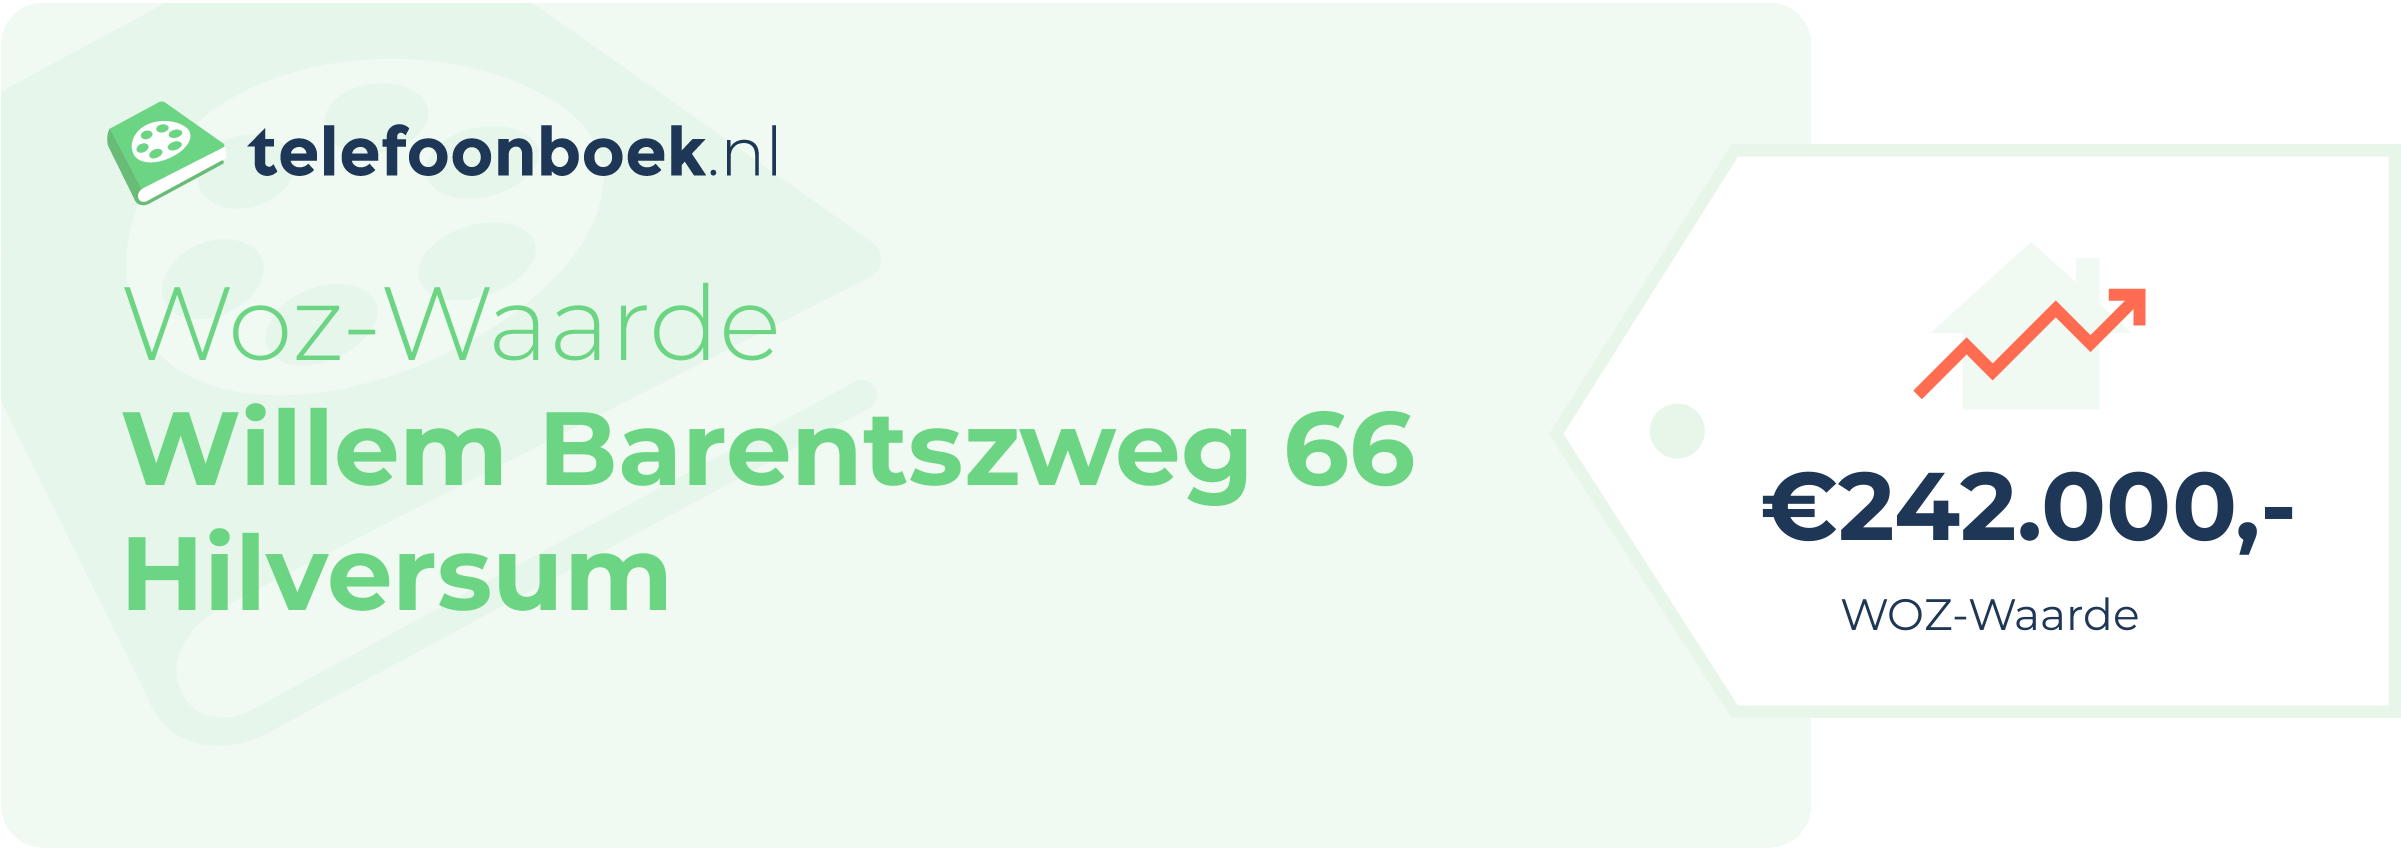 WOZ-waarde Willem Barentszweg 66 Hilversum